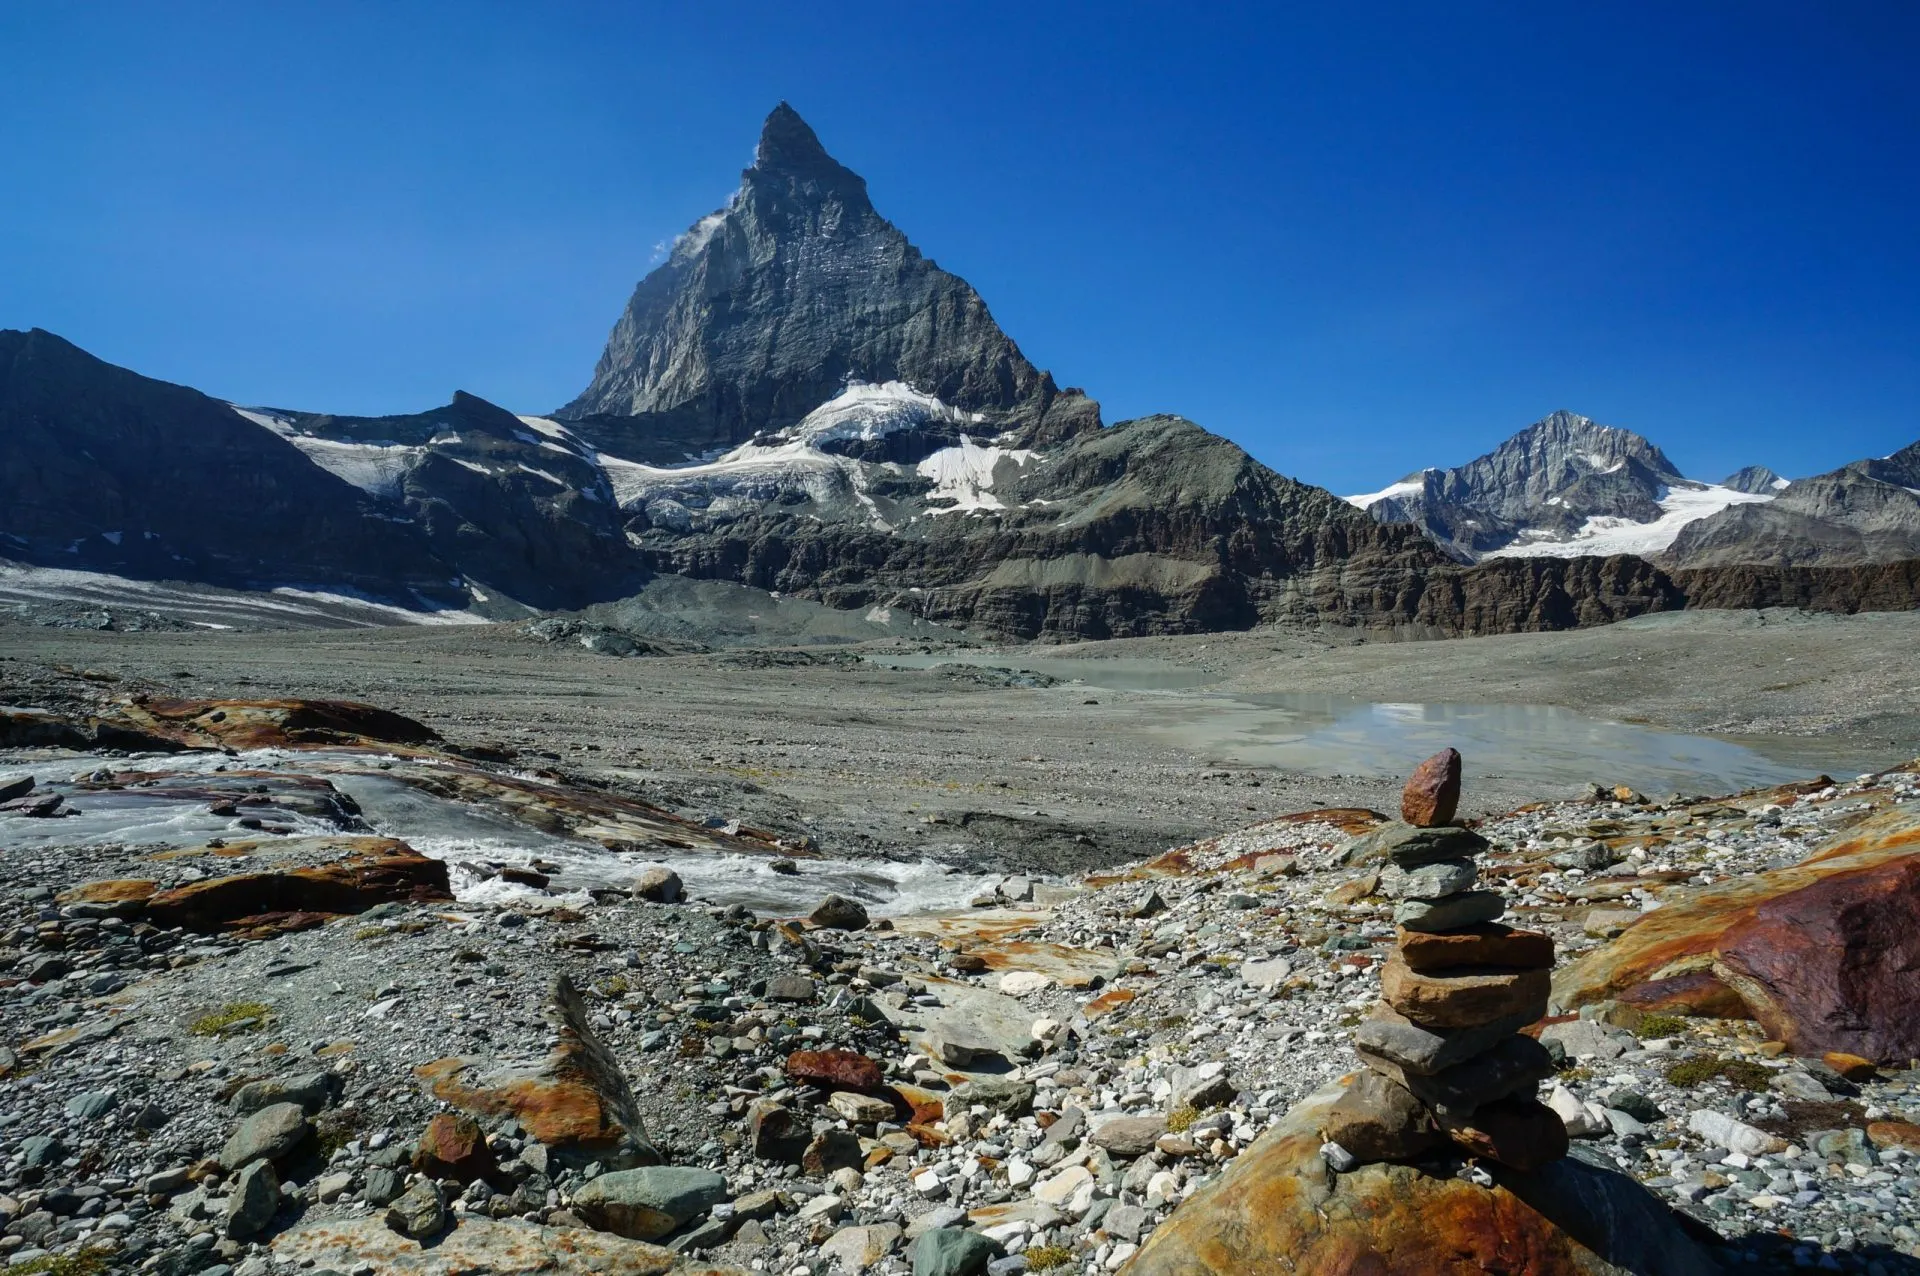 Explore Matterhorn from every direction